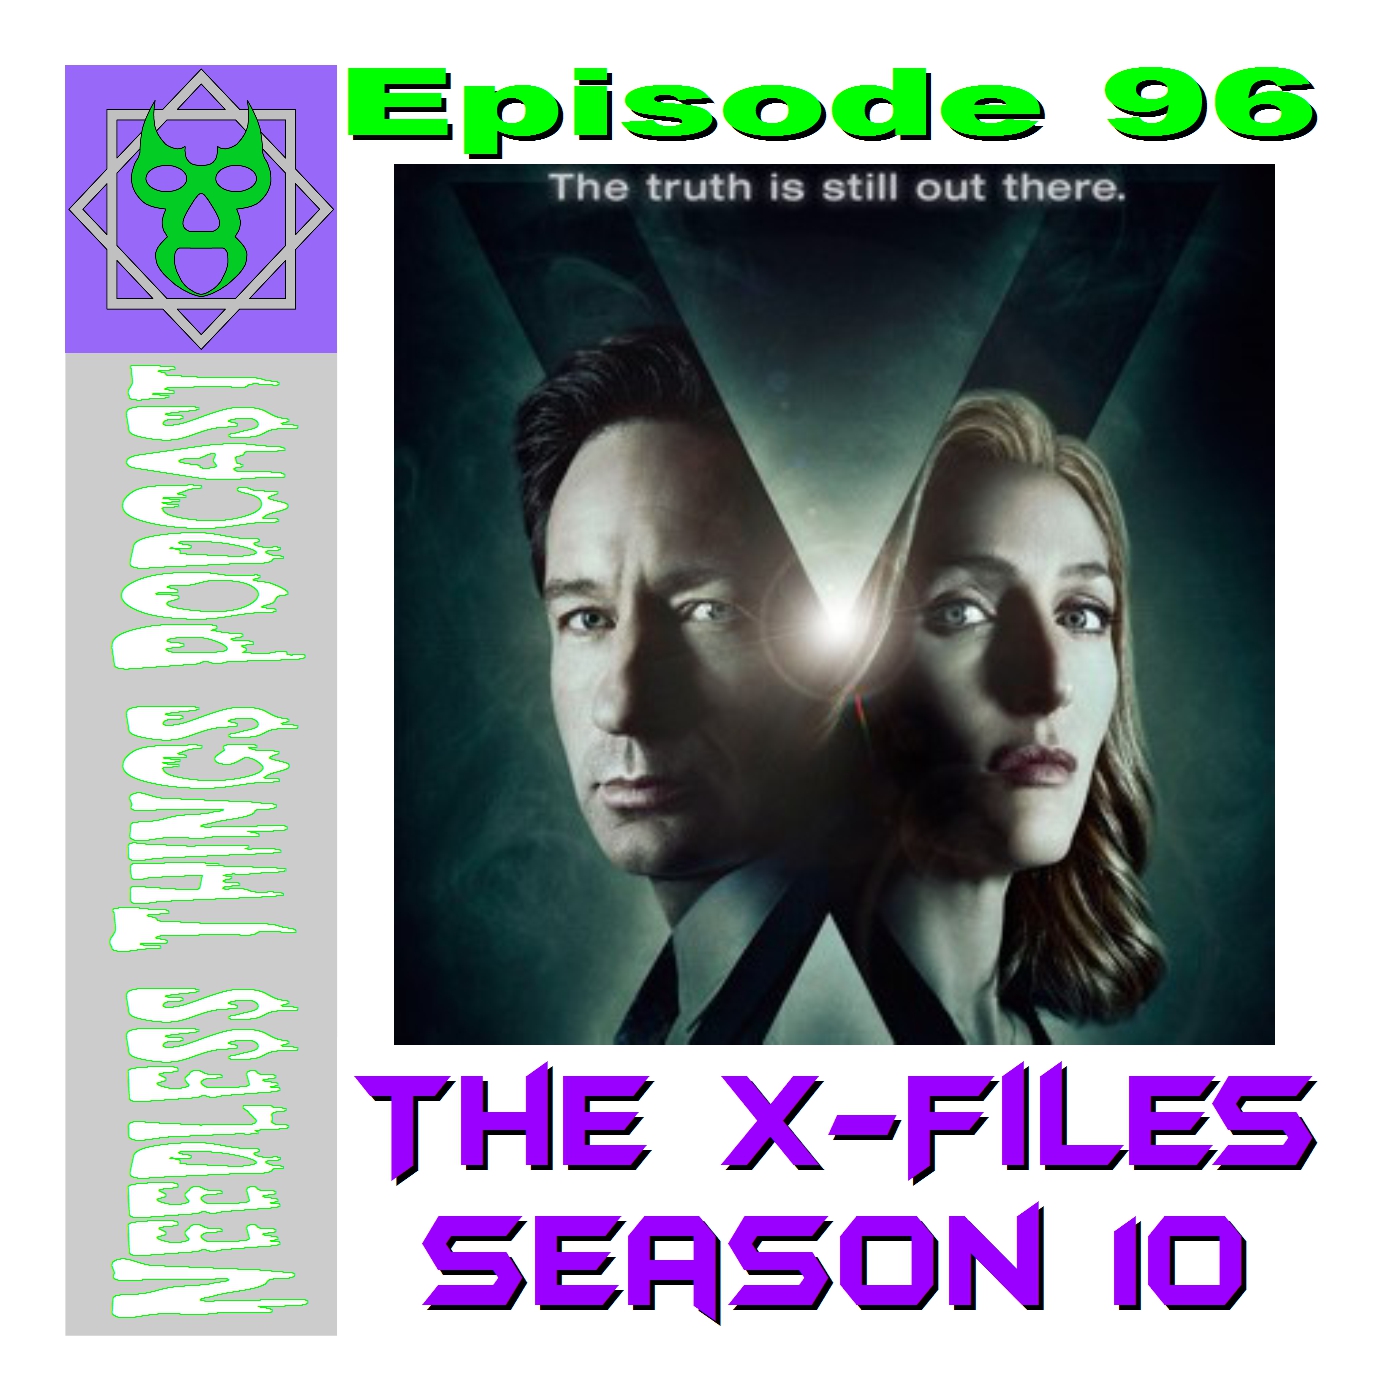 Needless Things Podcast 96 – The X-Files Season 10